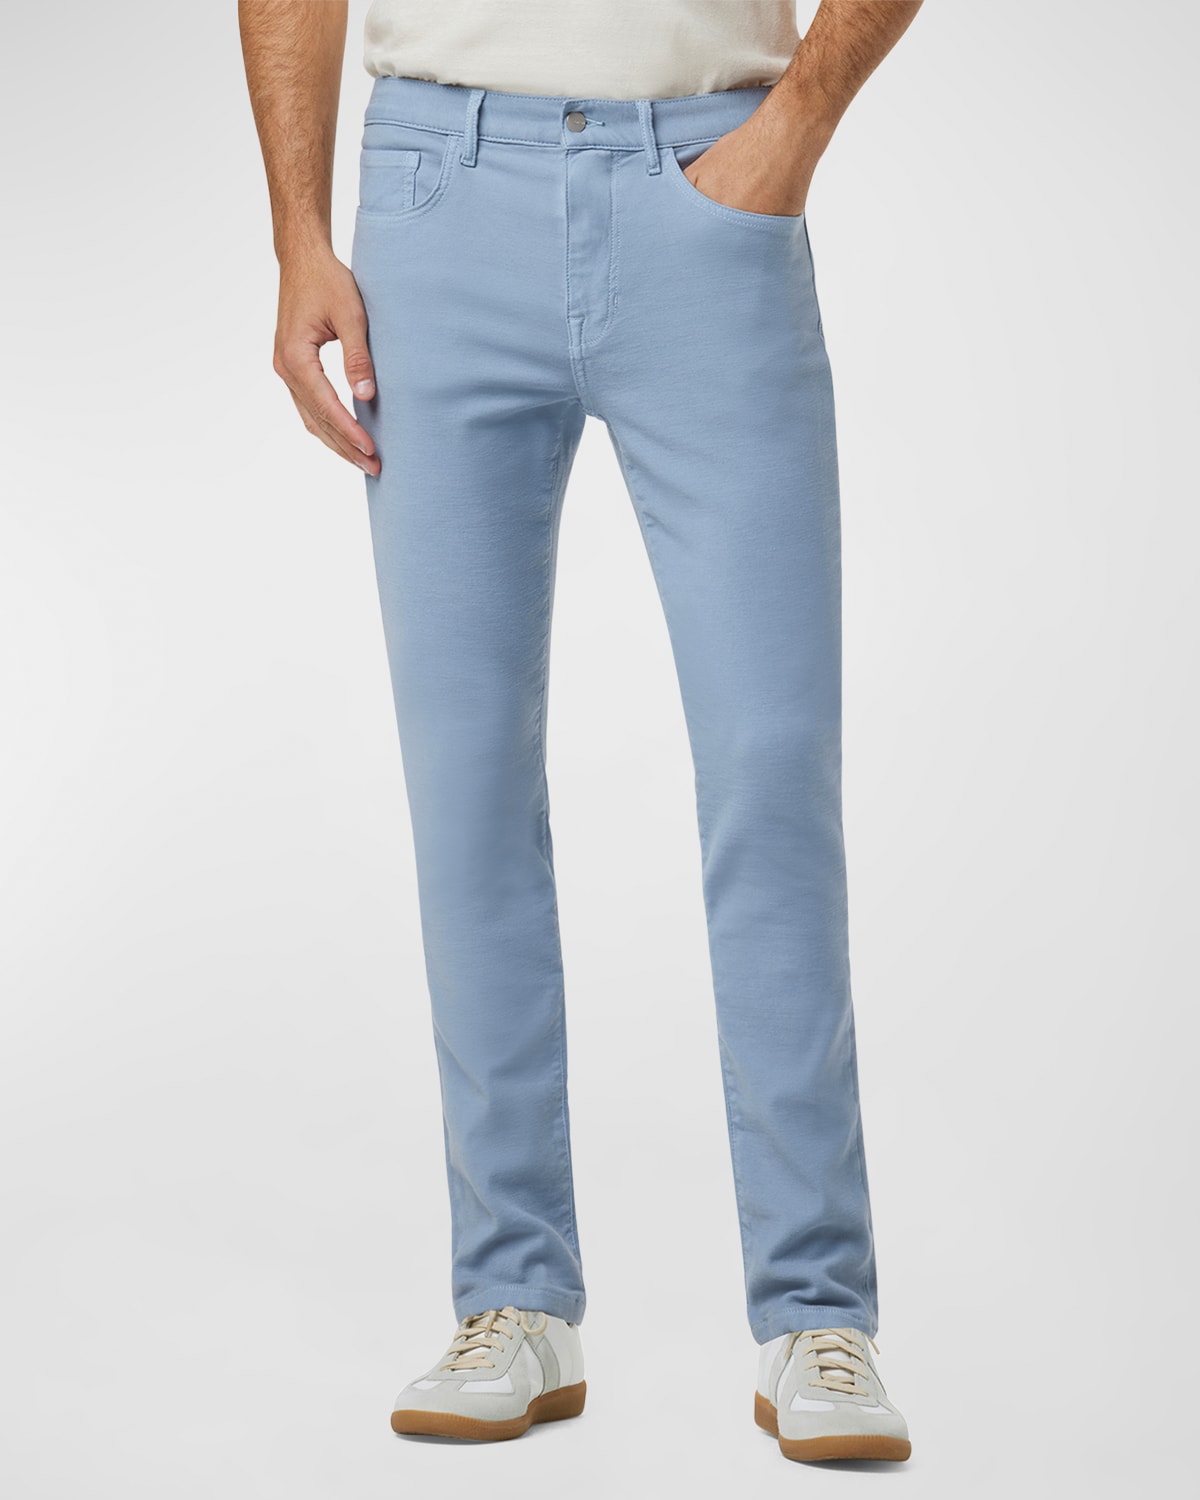 Men's Asher Soft Slim-Fit Jeans